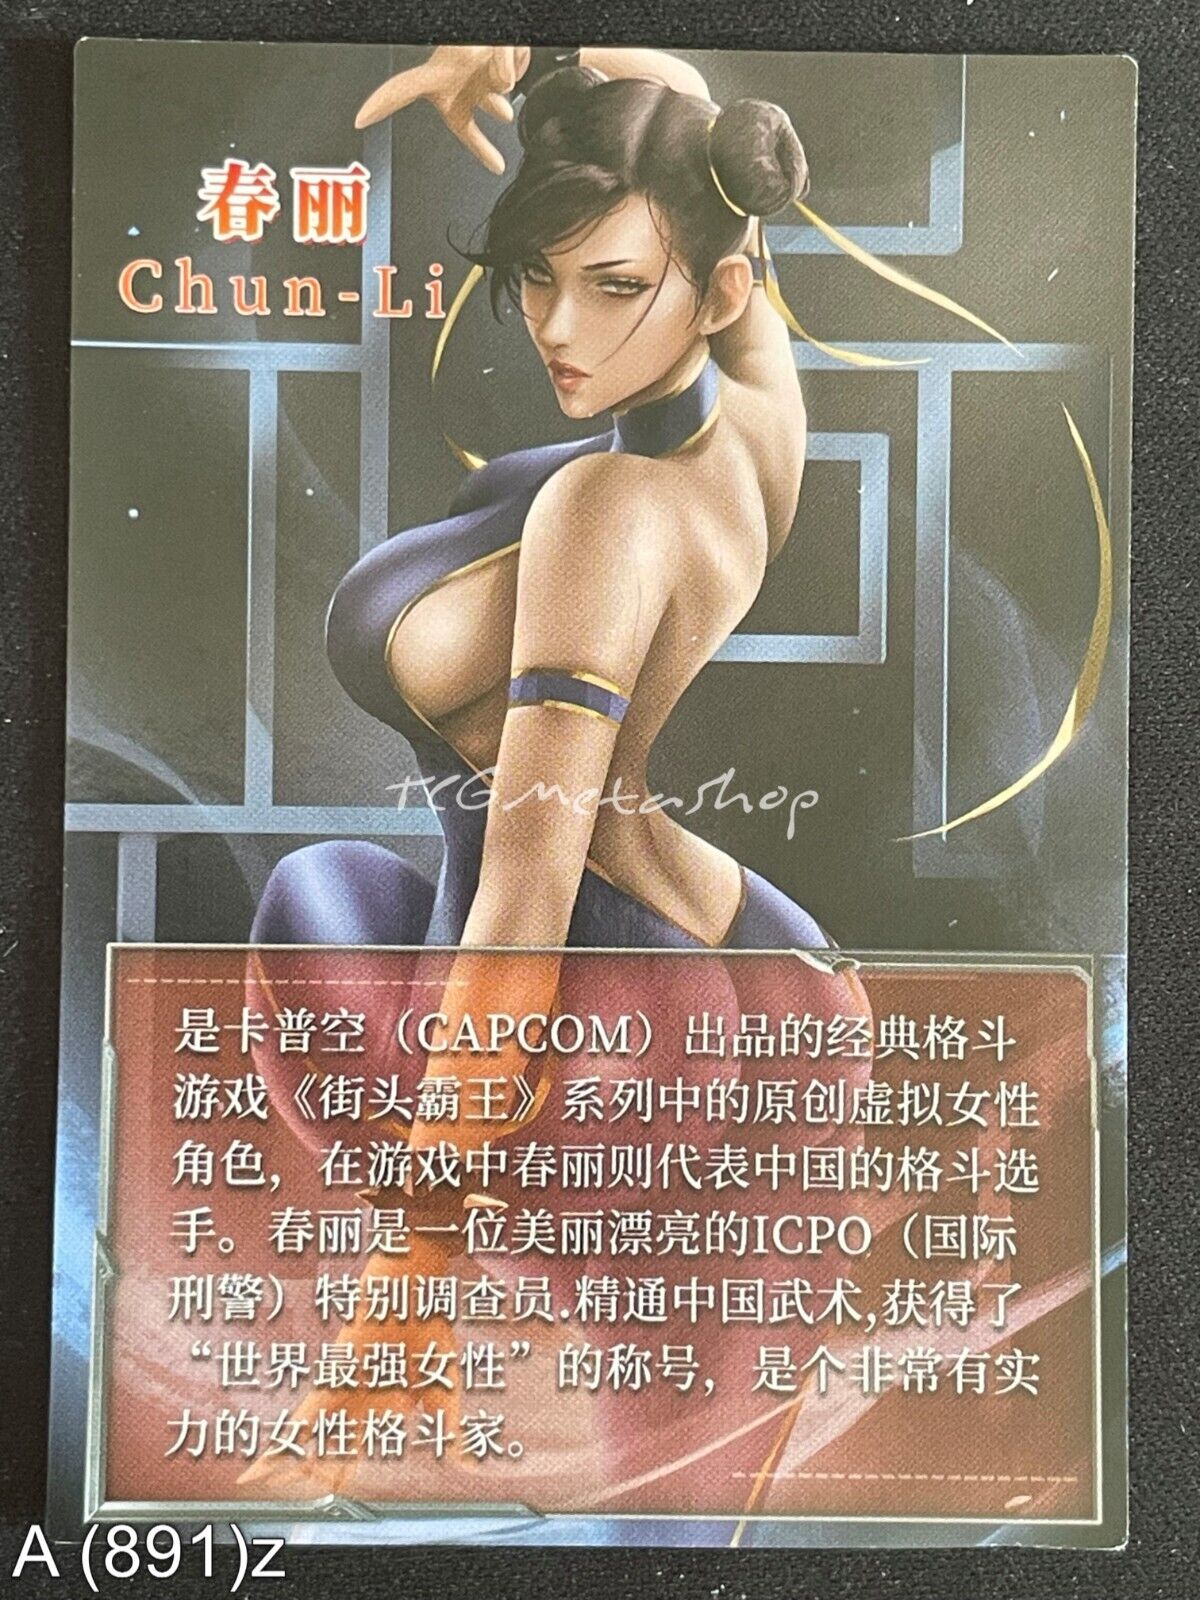 🔥 A 891 Chun-Li Street Fighter Goddess Story Anime Waifu Card ACG 🔥